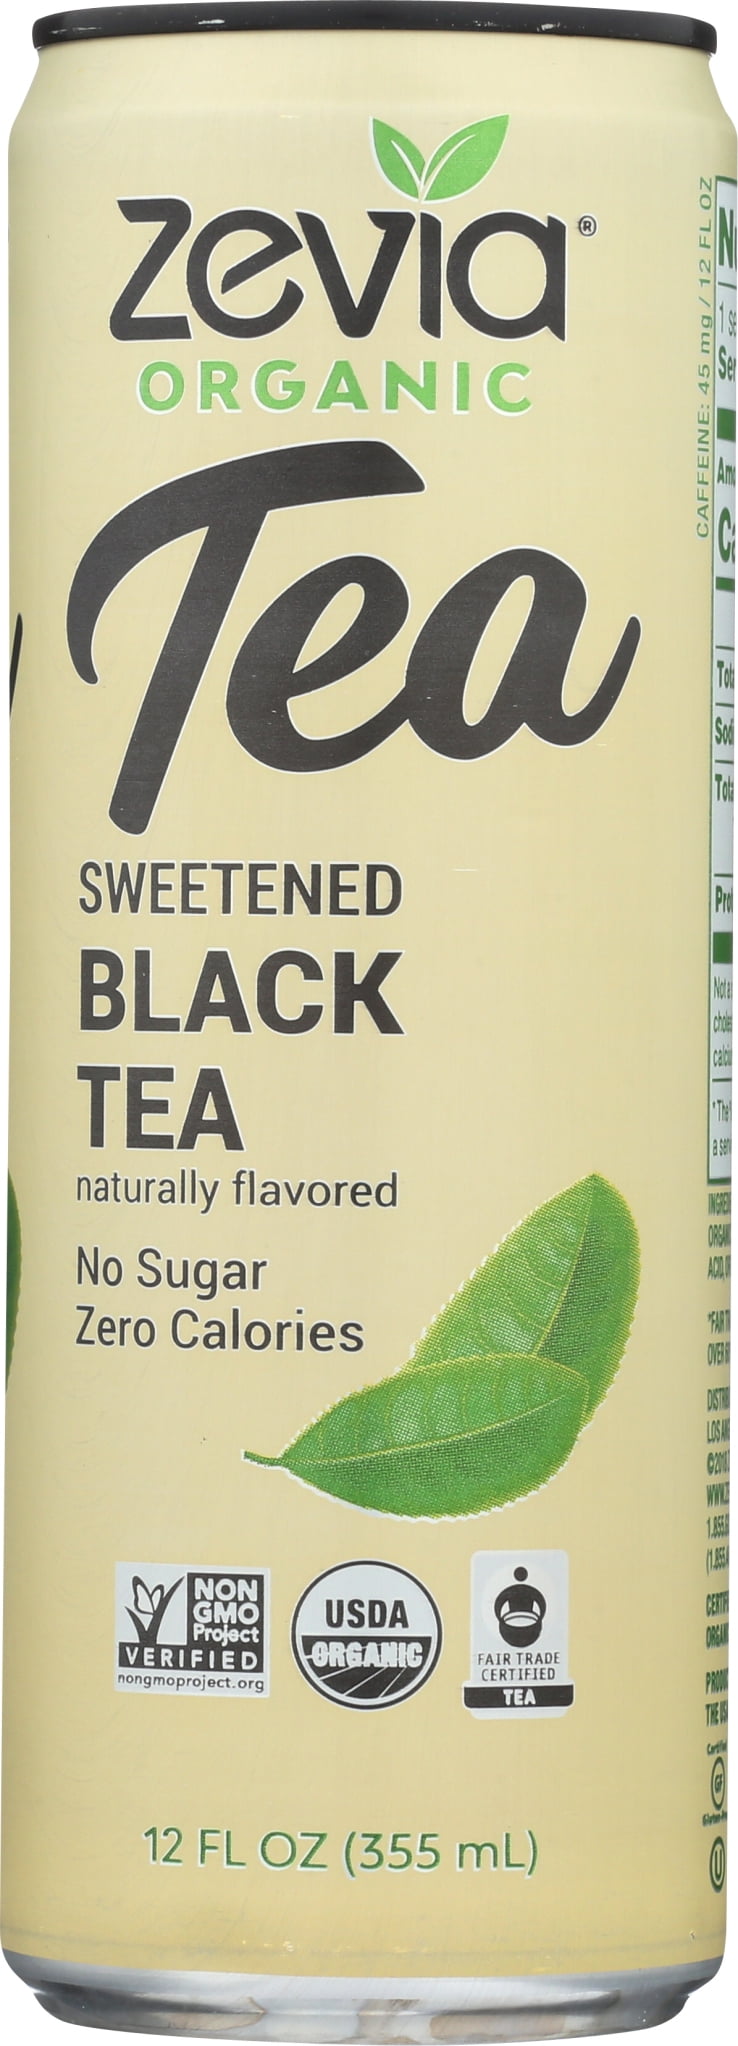 Zevia Sweetened Black Tea 12 Fl Oz